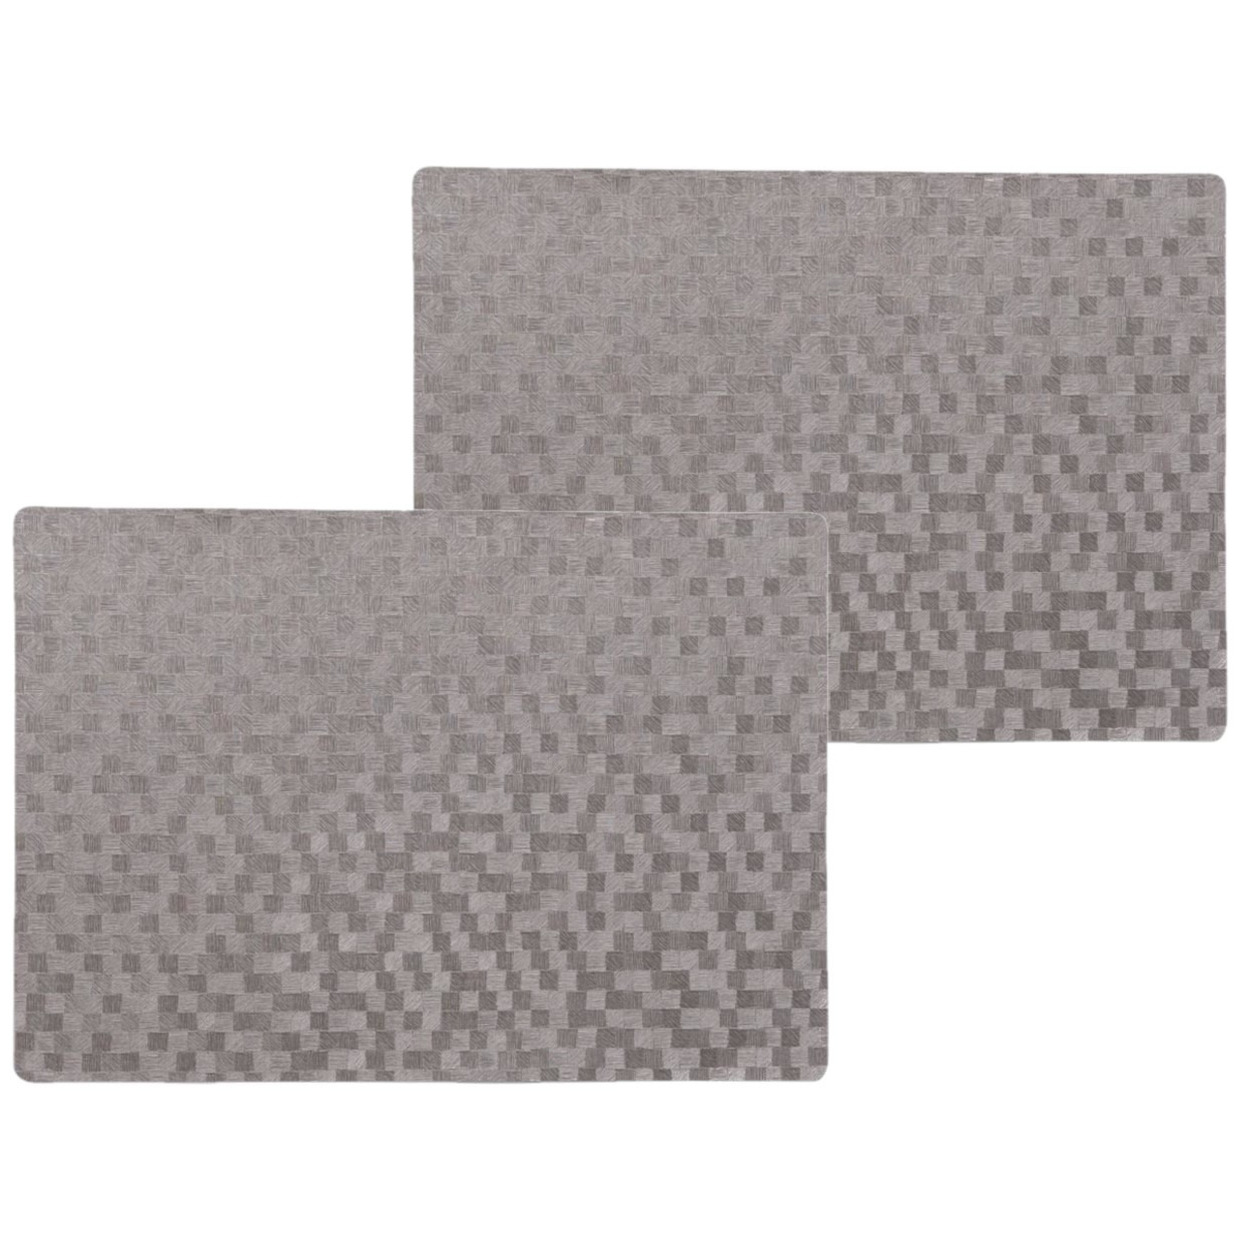 Wicotex 10x stuks stevige luxe Tafel placemats Stones grijs 30 x 43 cm -